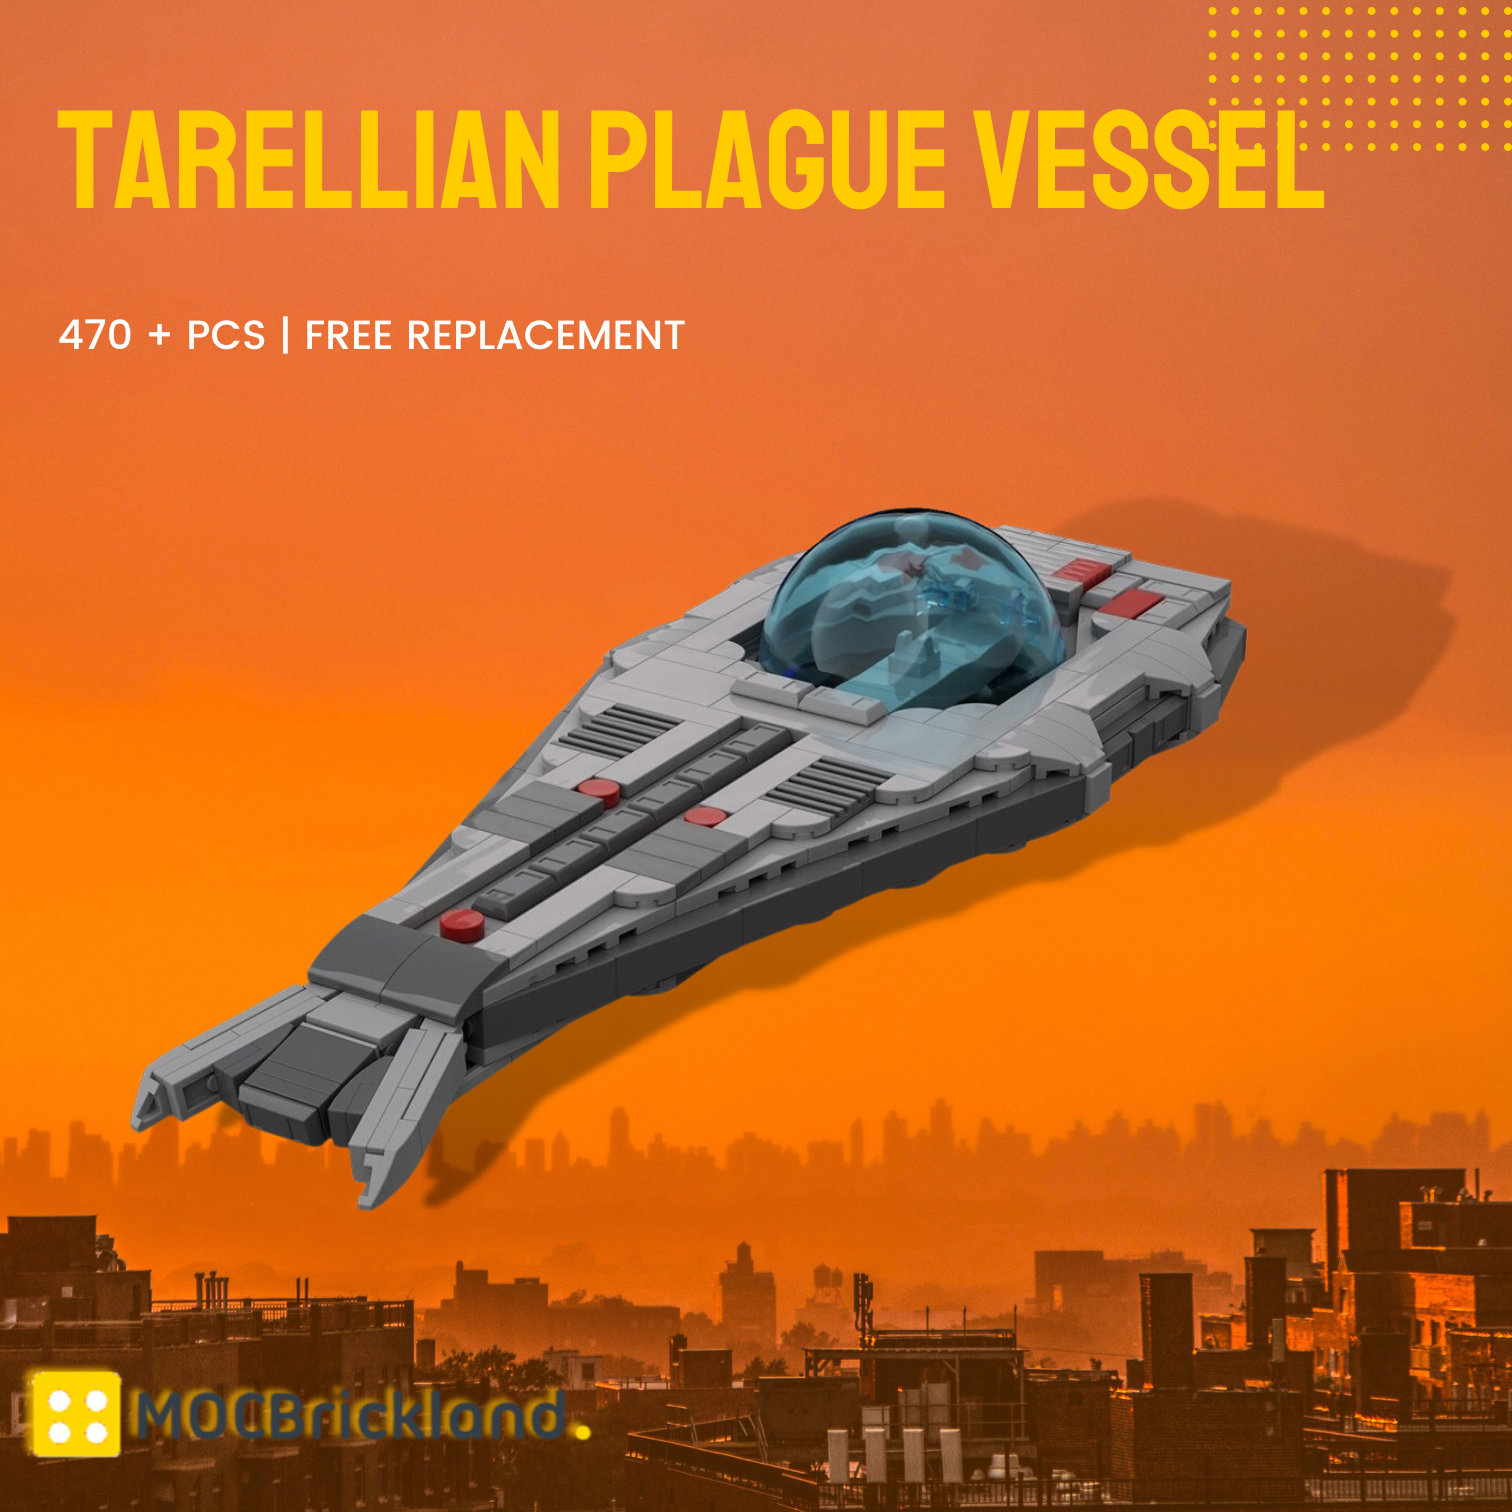 Space MOC-119084 Tarellian Plague Vessel MOCBRICKLAND